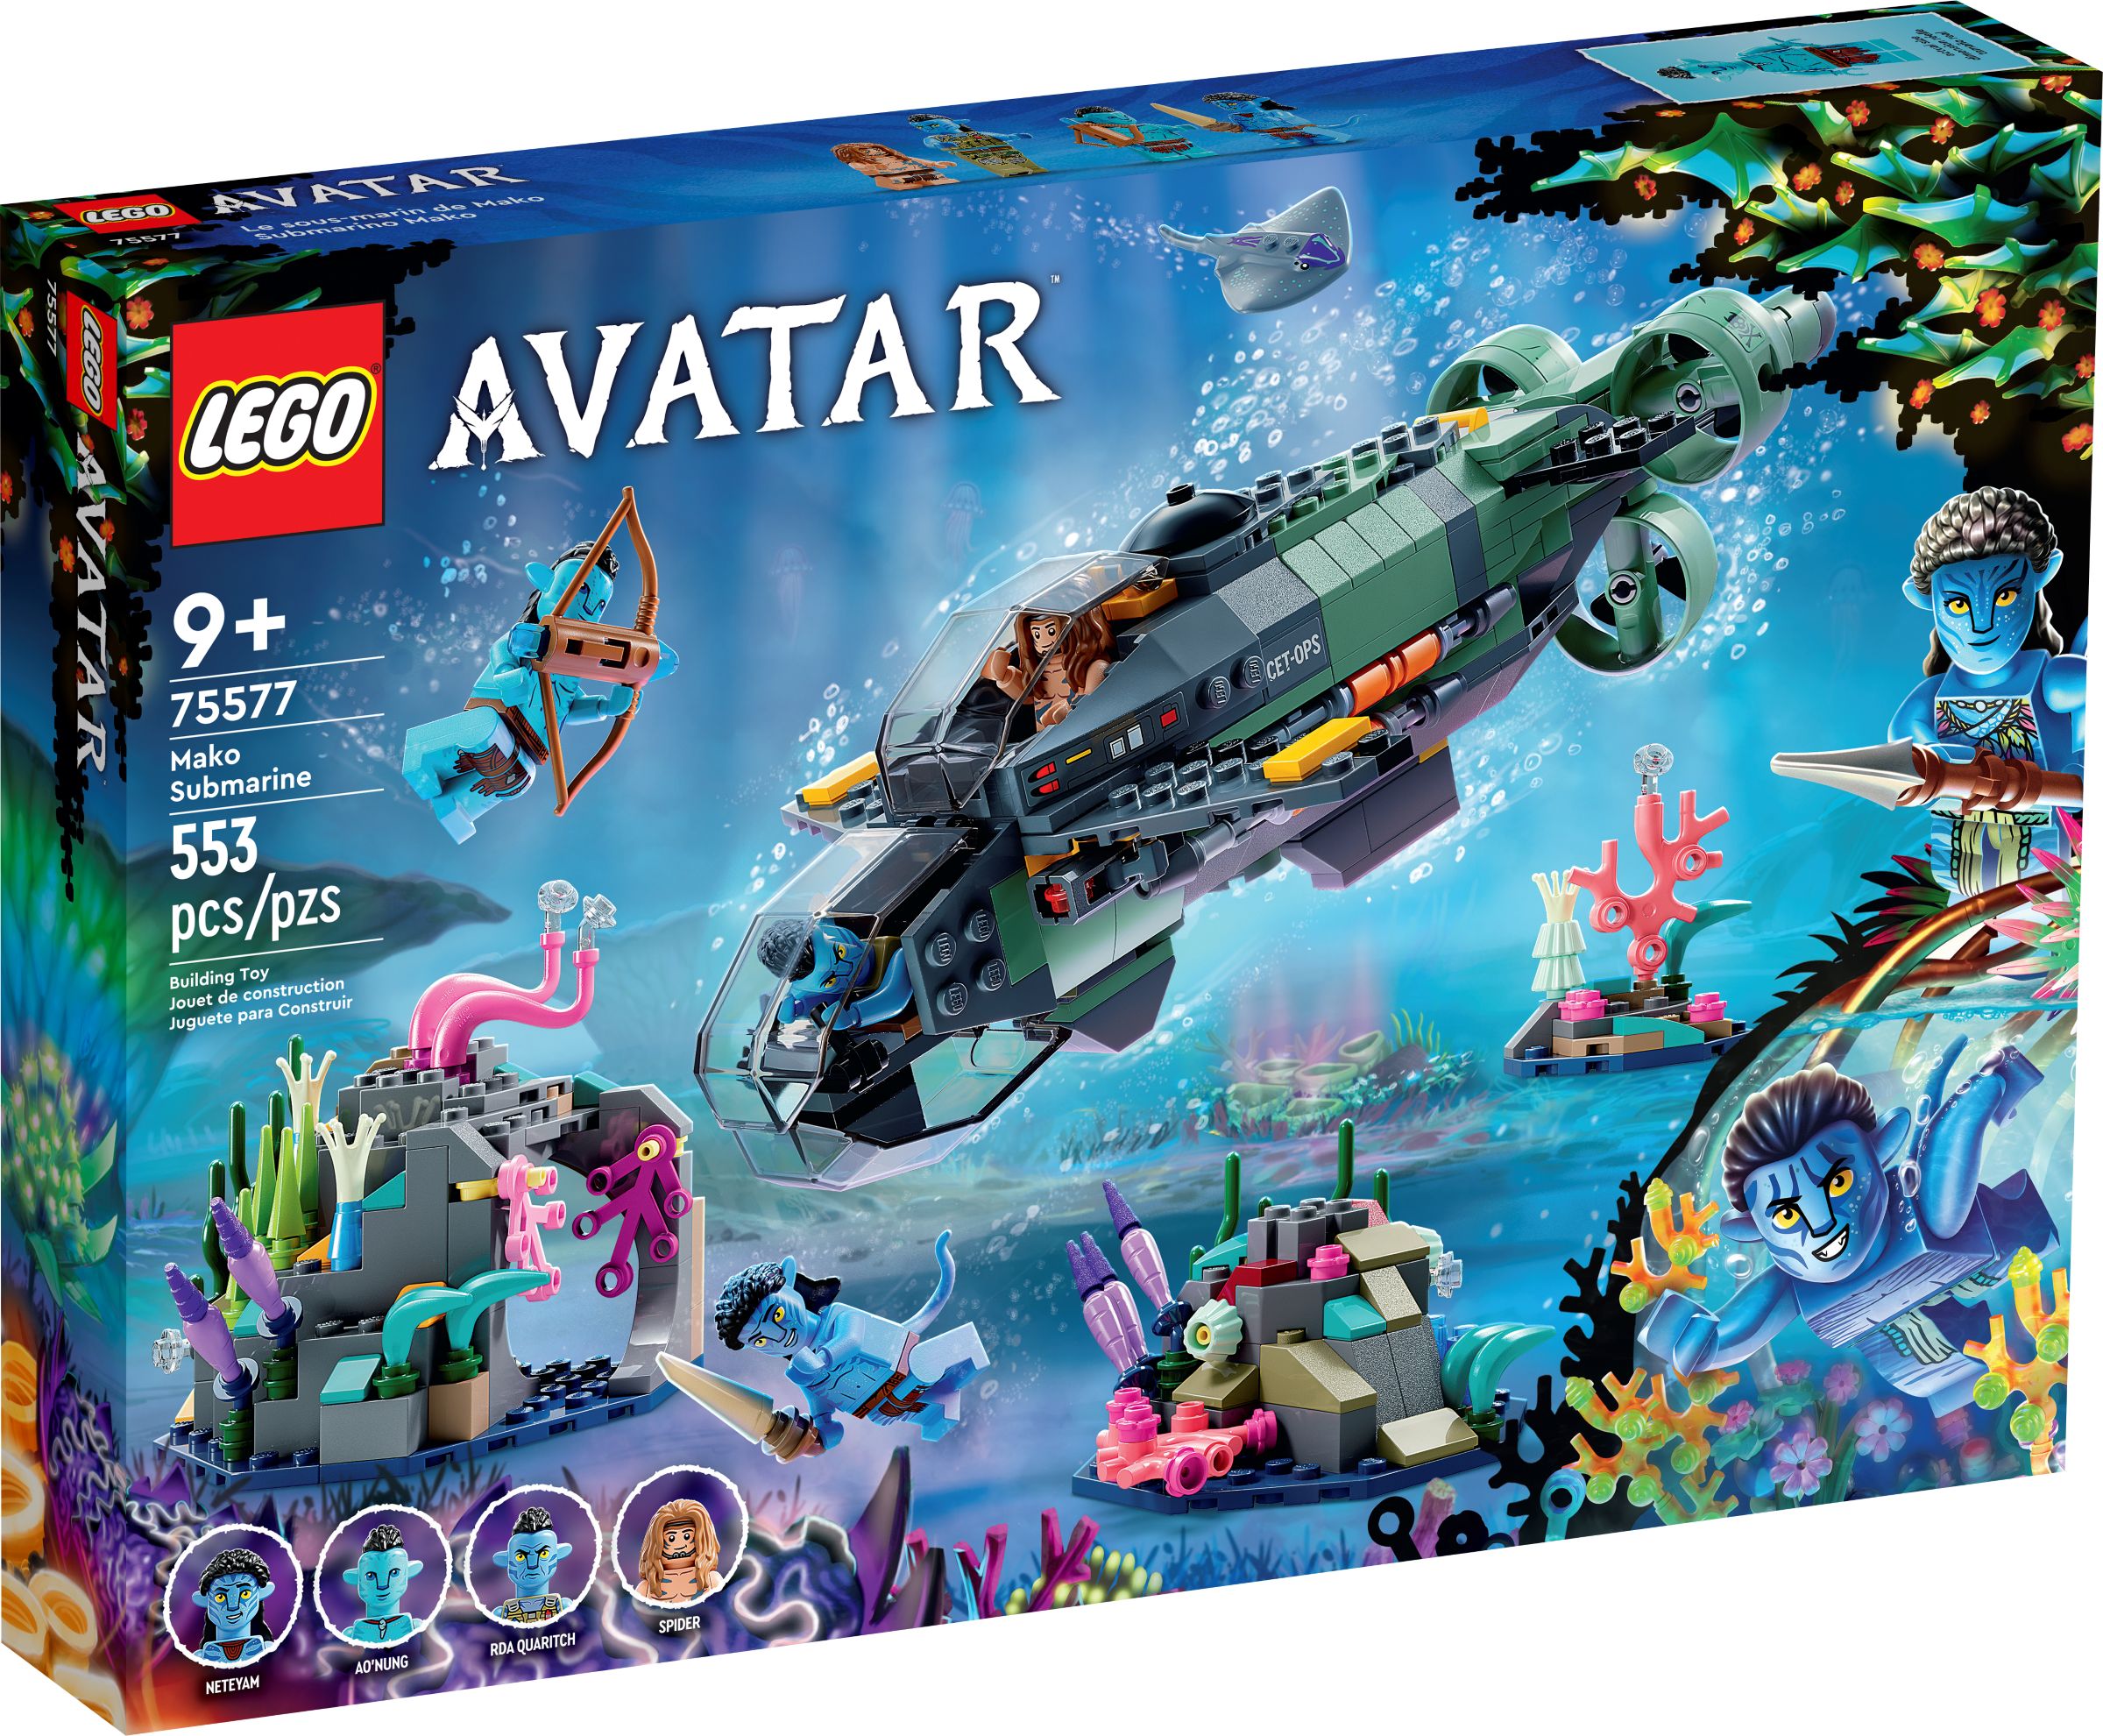 LEGO Avatar 75577 Mako U-Boot LEGO_75577_alt1.jpg